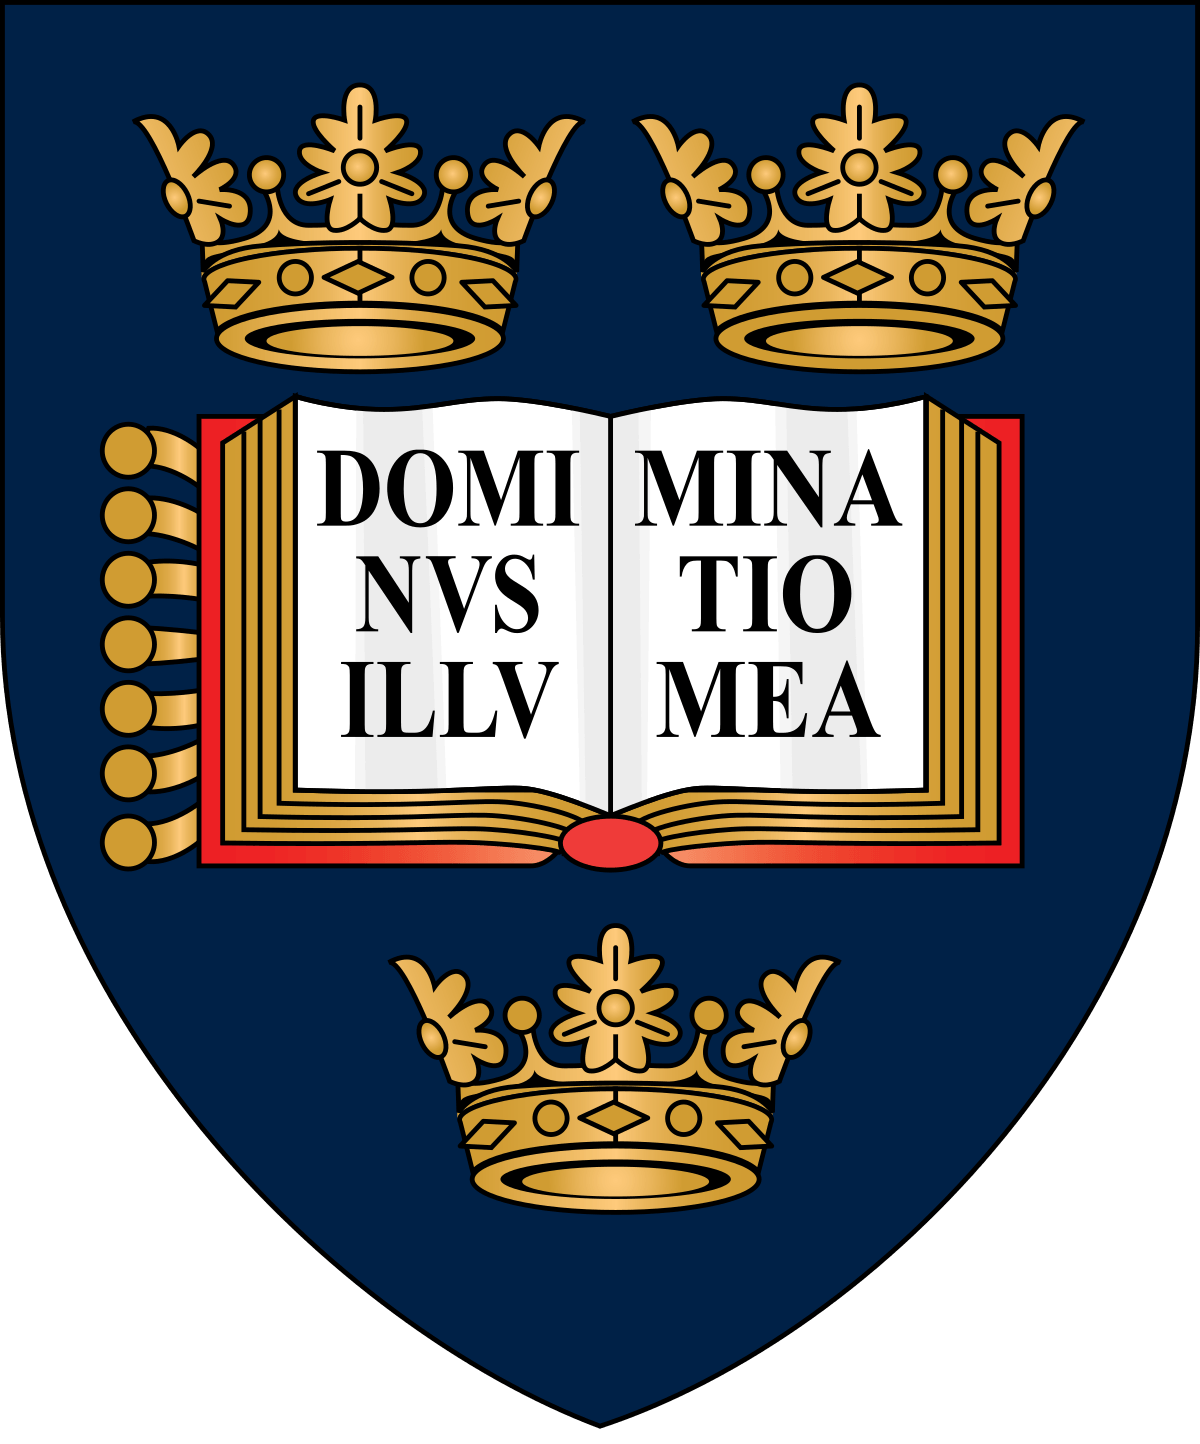 Universityofoxford Logo - Coat of arms of the University of Oxford